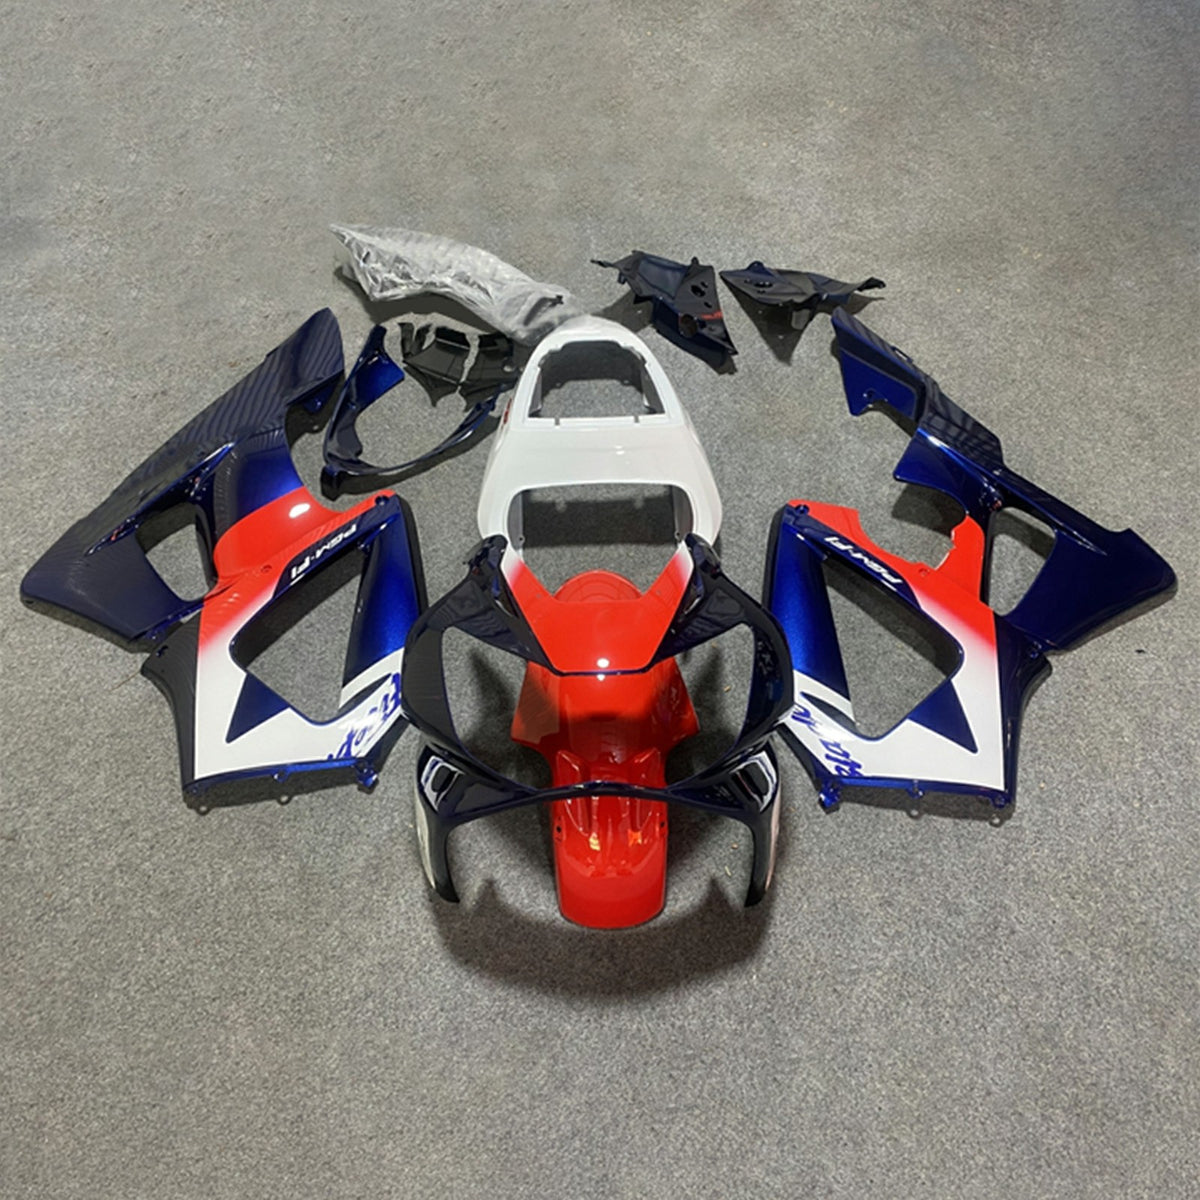 Kit carena Amotopart 2000-2001 CBR929RR Honda rosso e blu